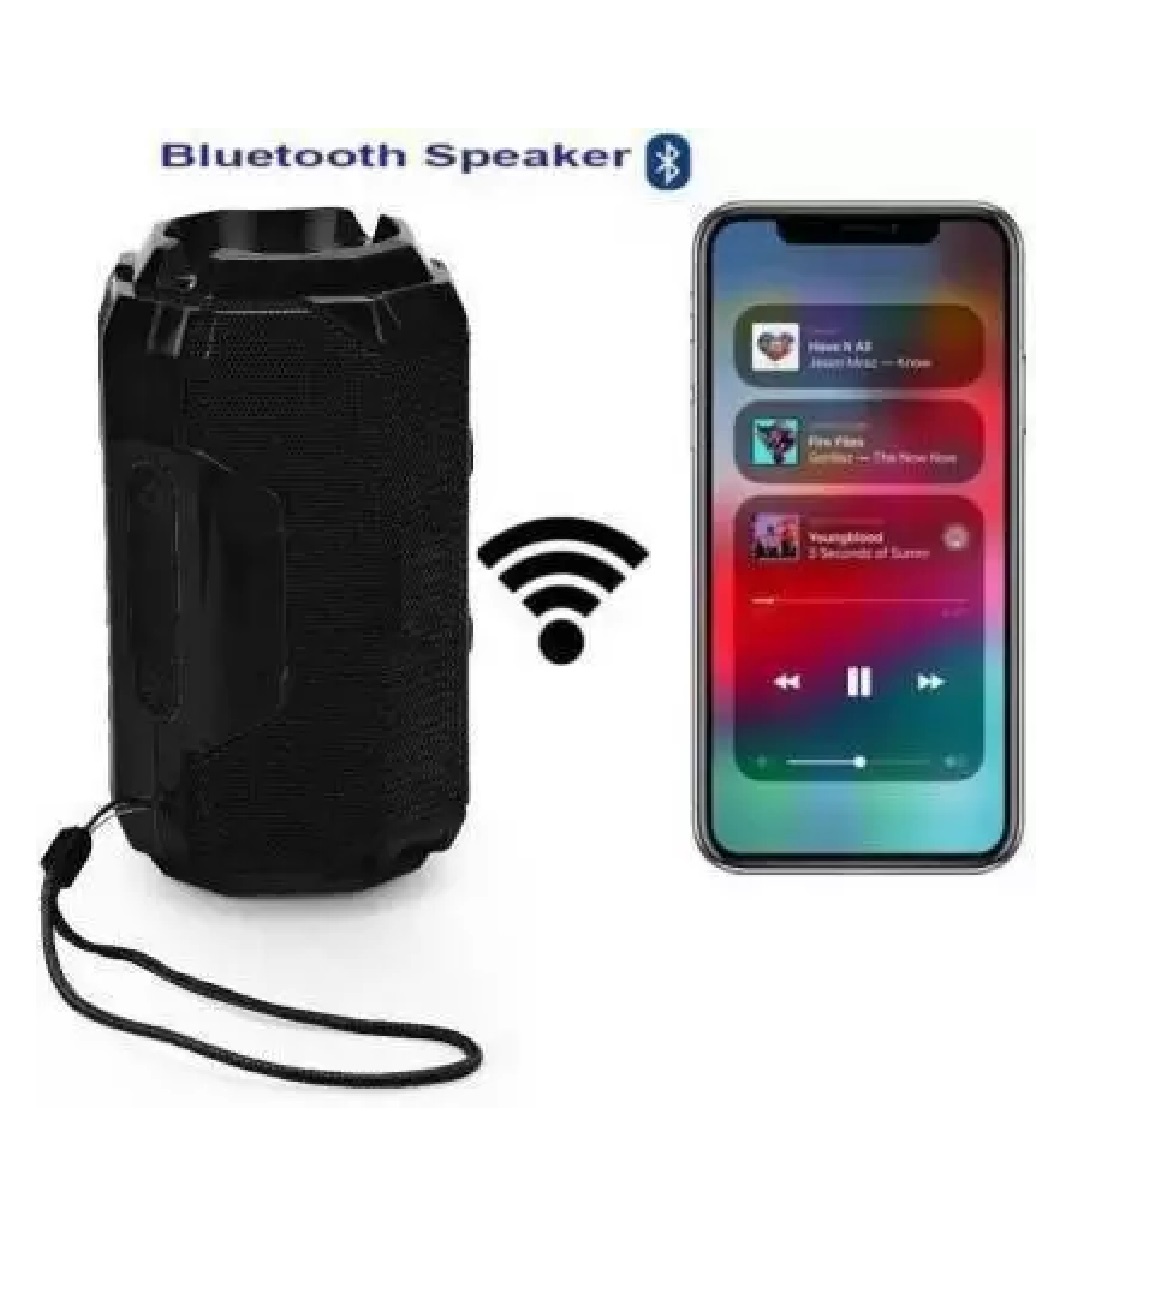 AO106 Bluetooth Speaker